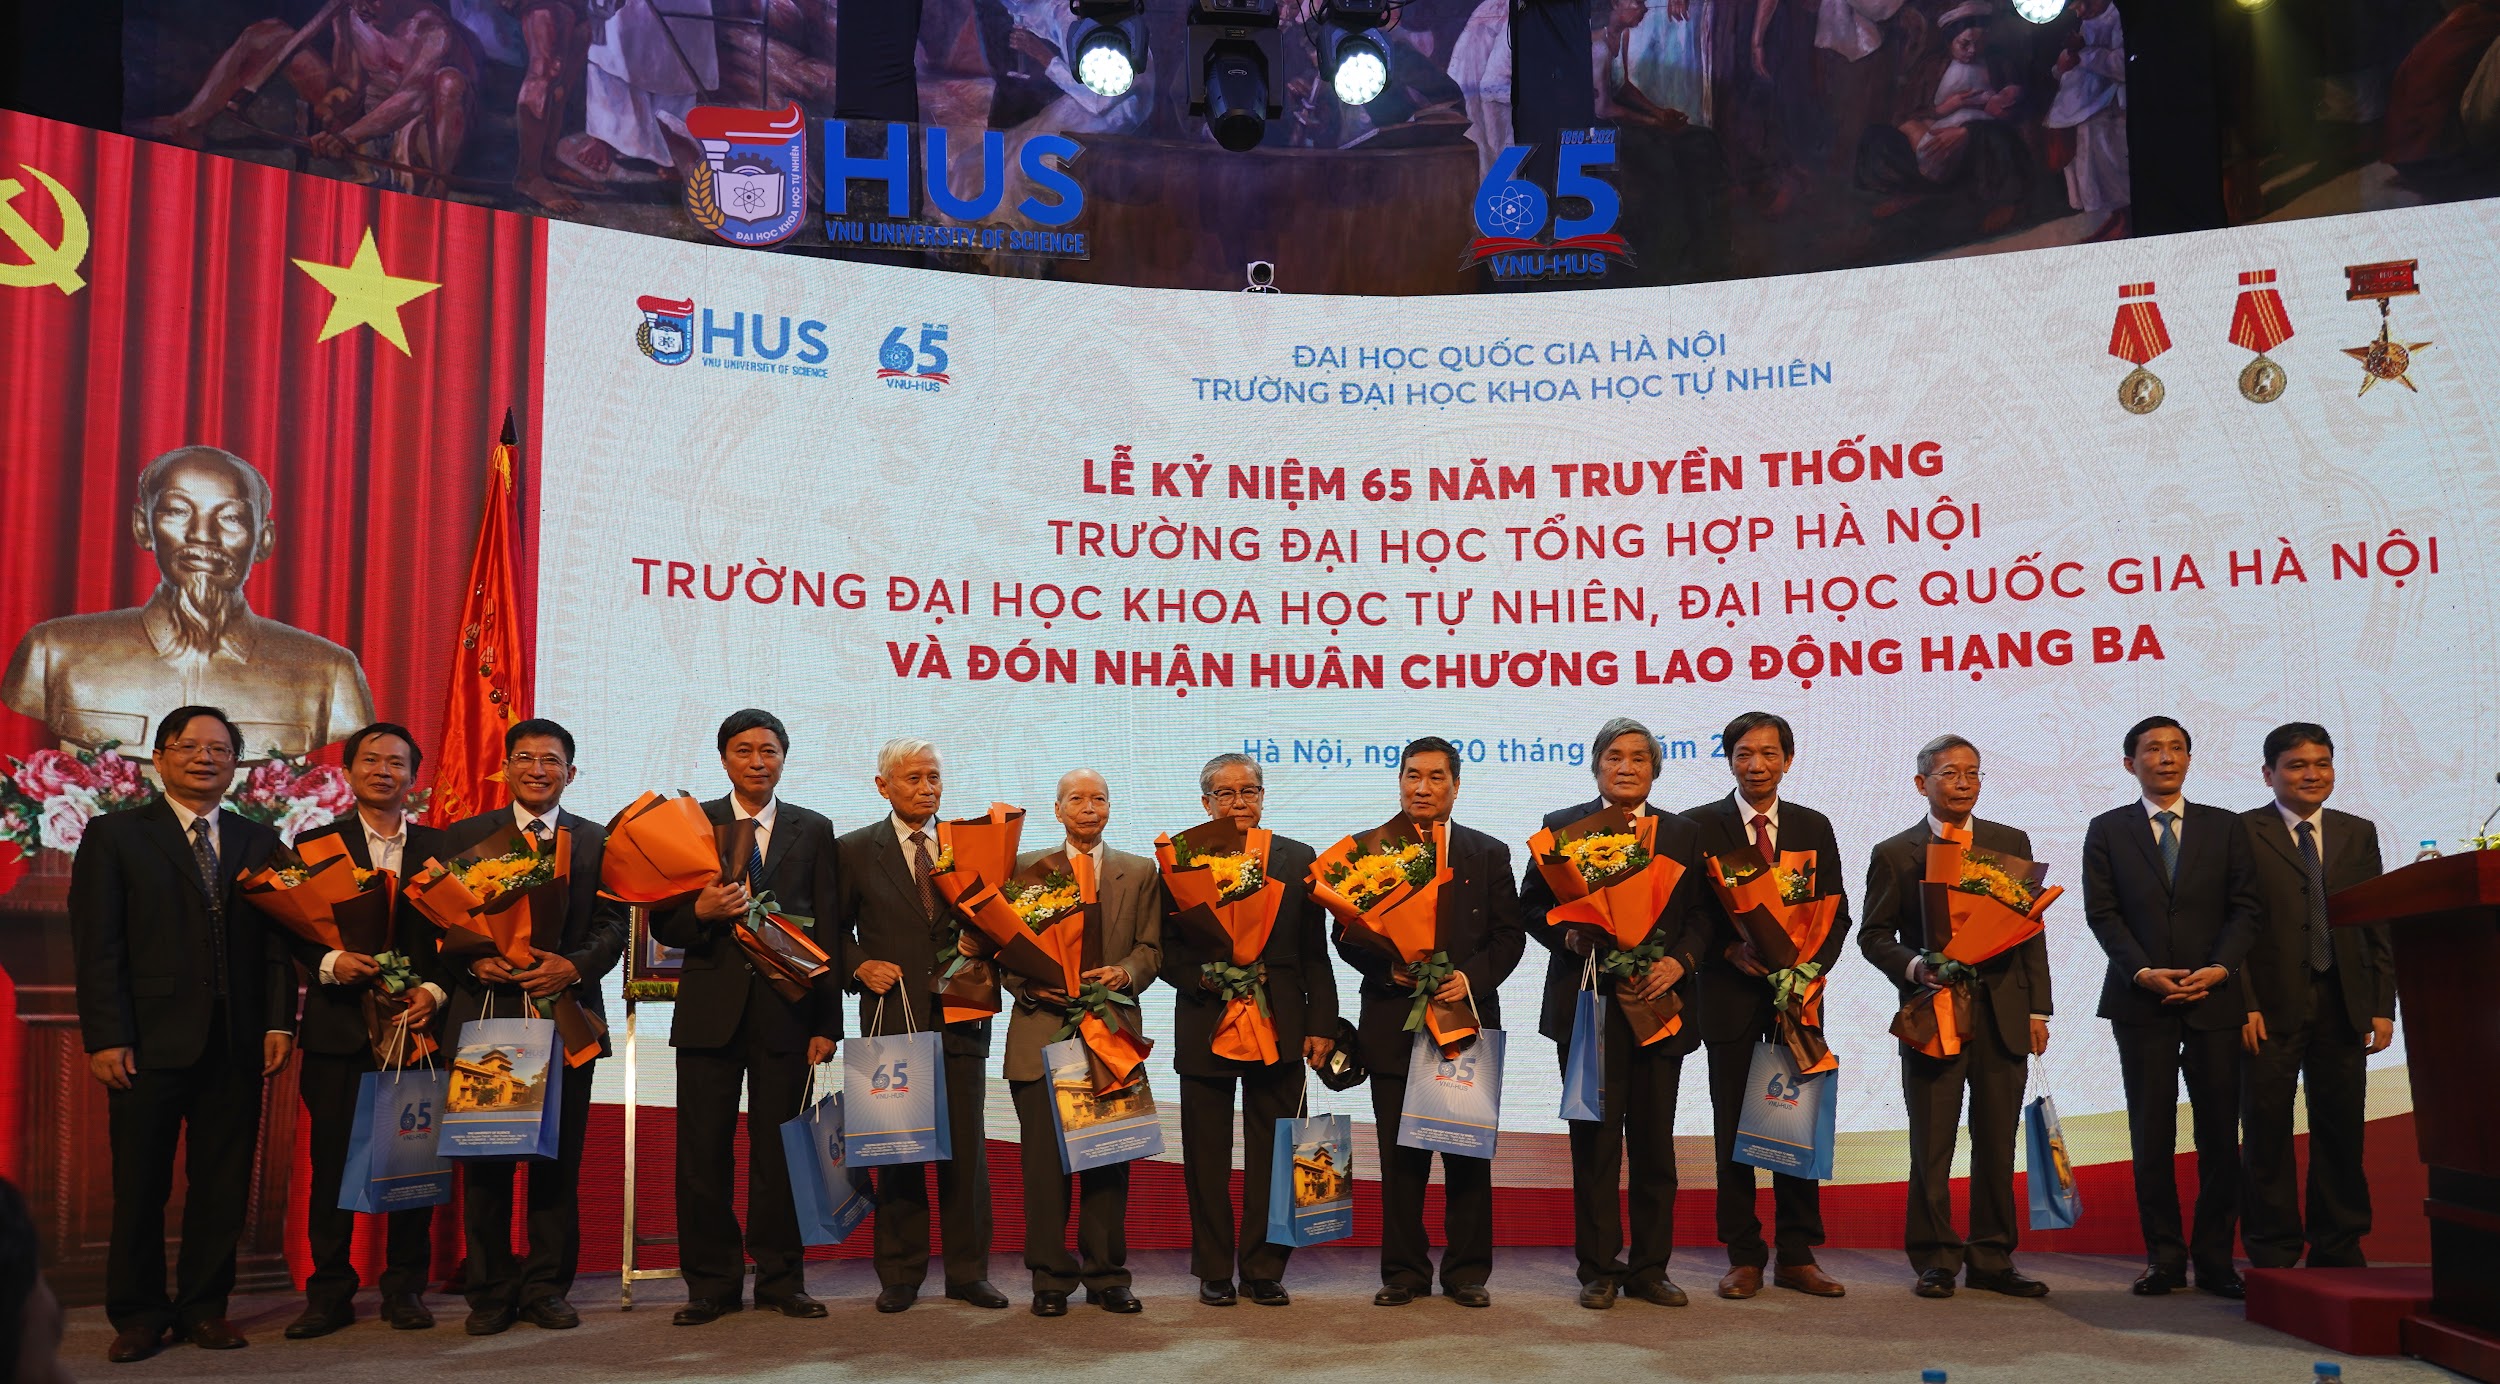 VNU-HUS celebrates its 65th anniversary